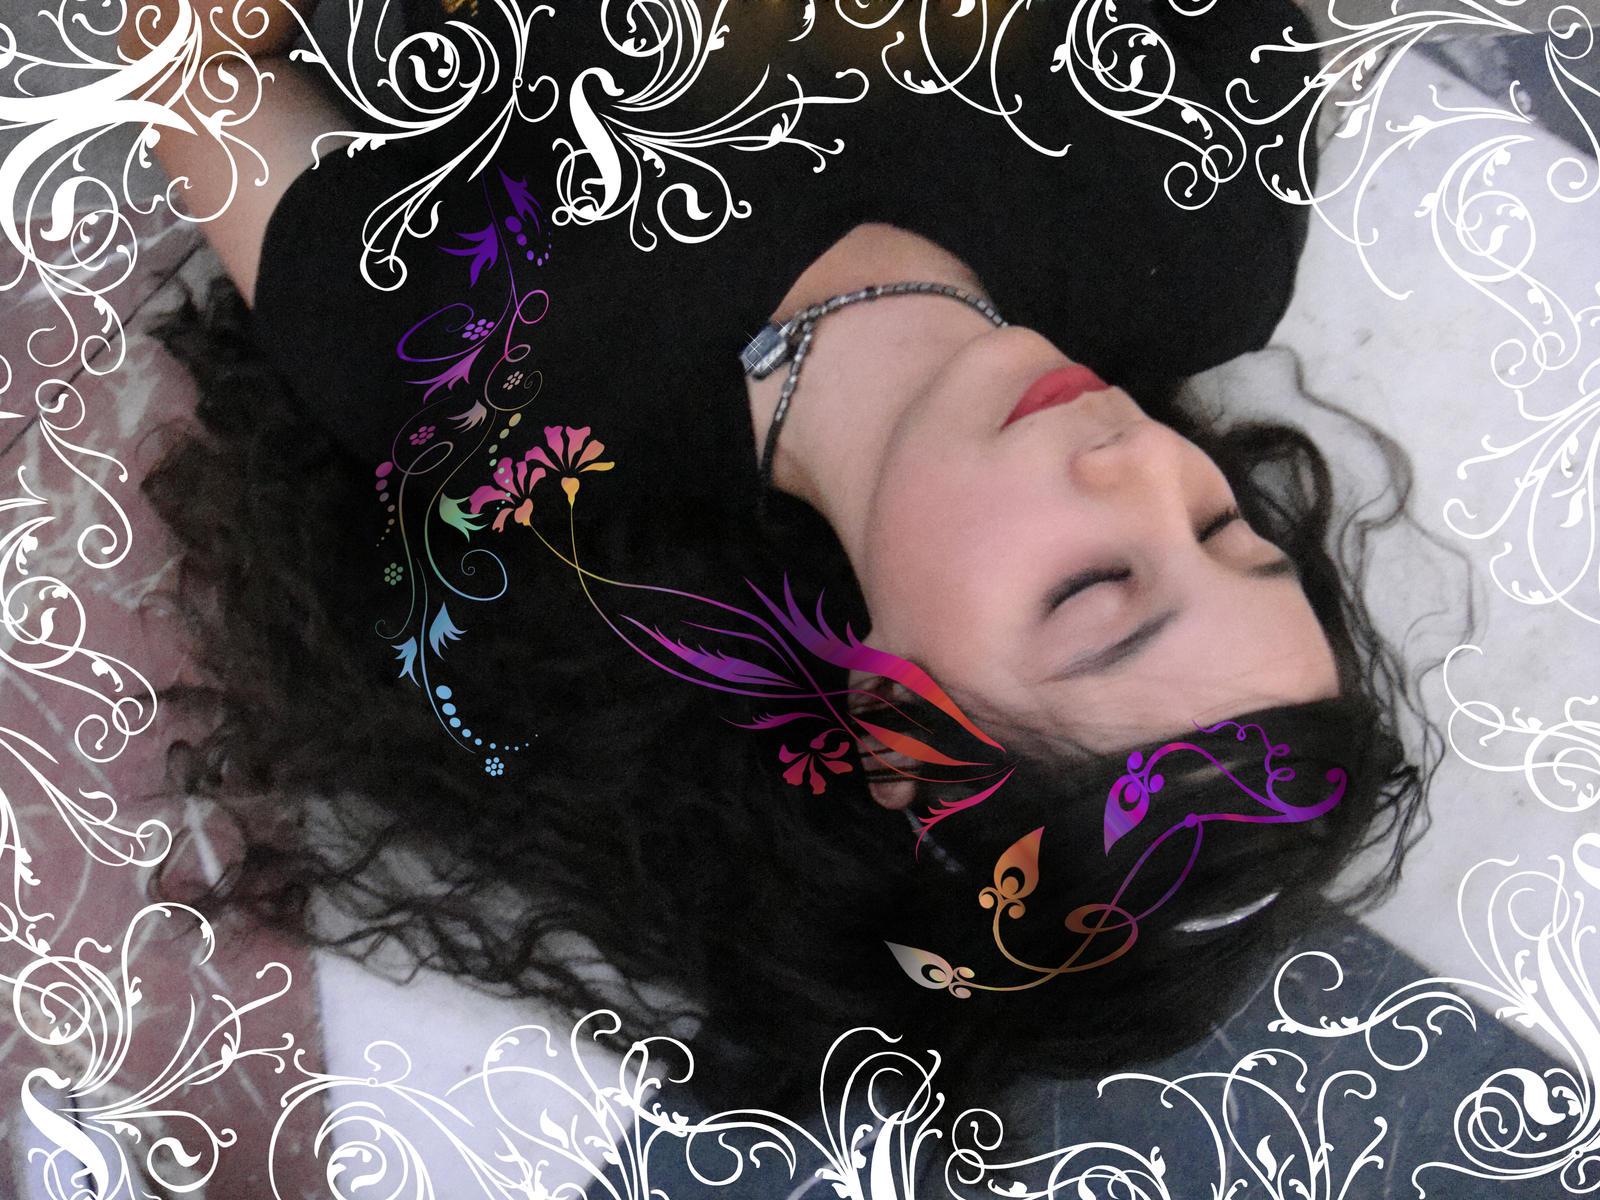 Sleeping beauty has dark hair by pequenaru on DeviantArt